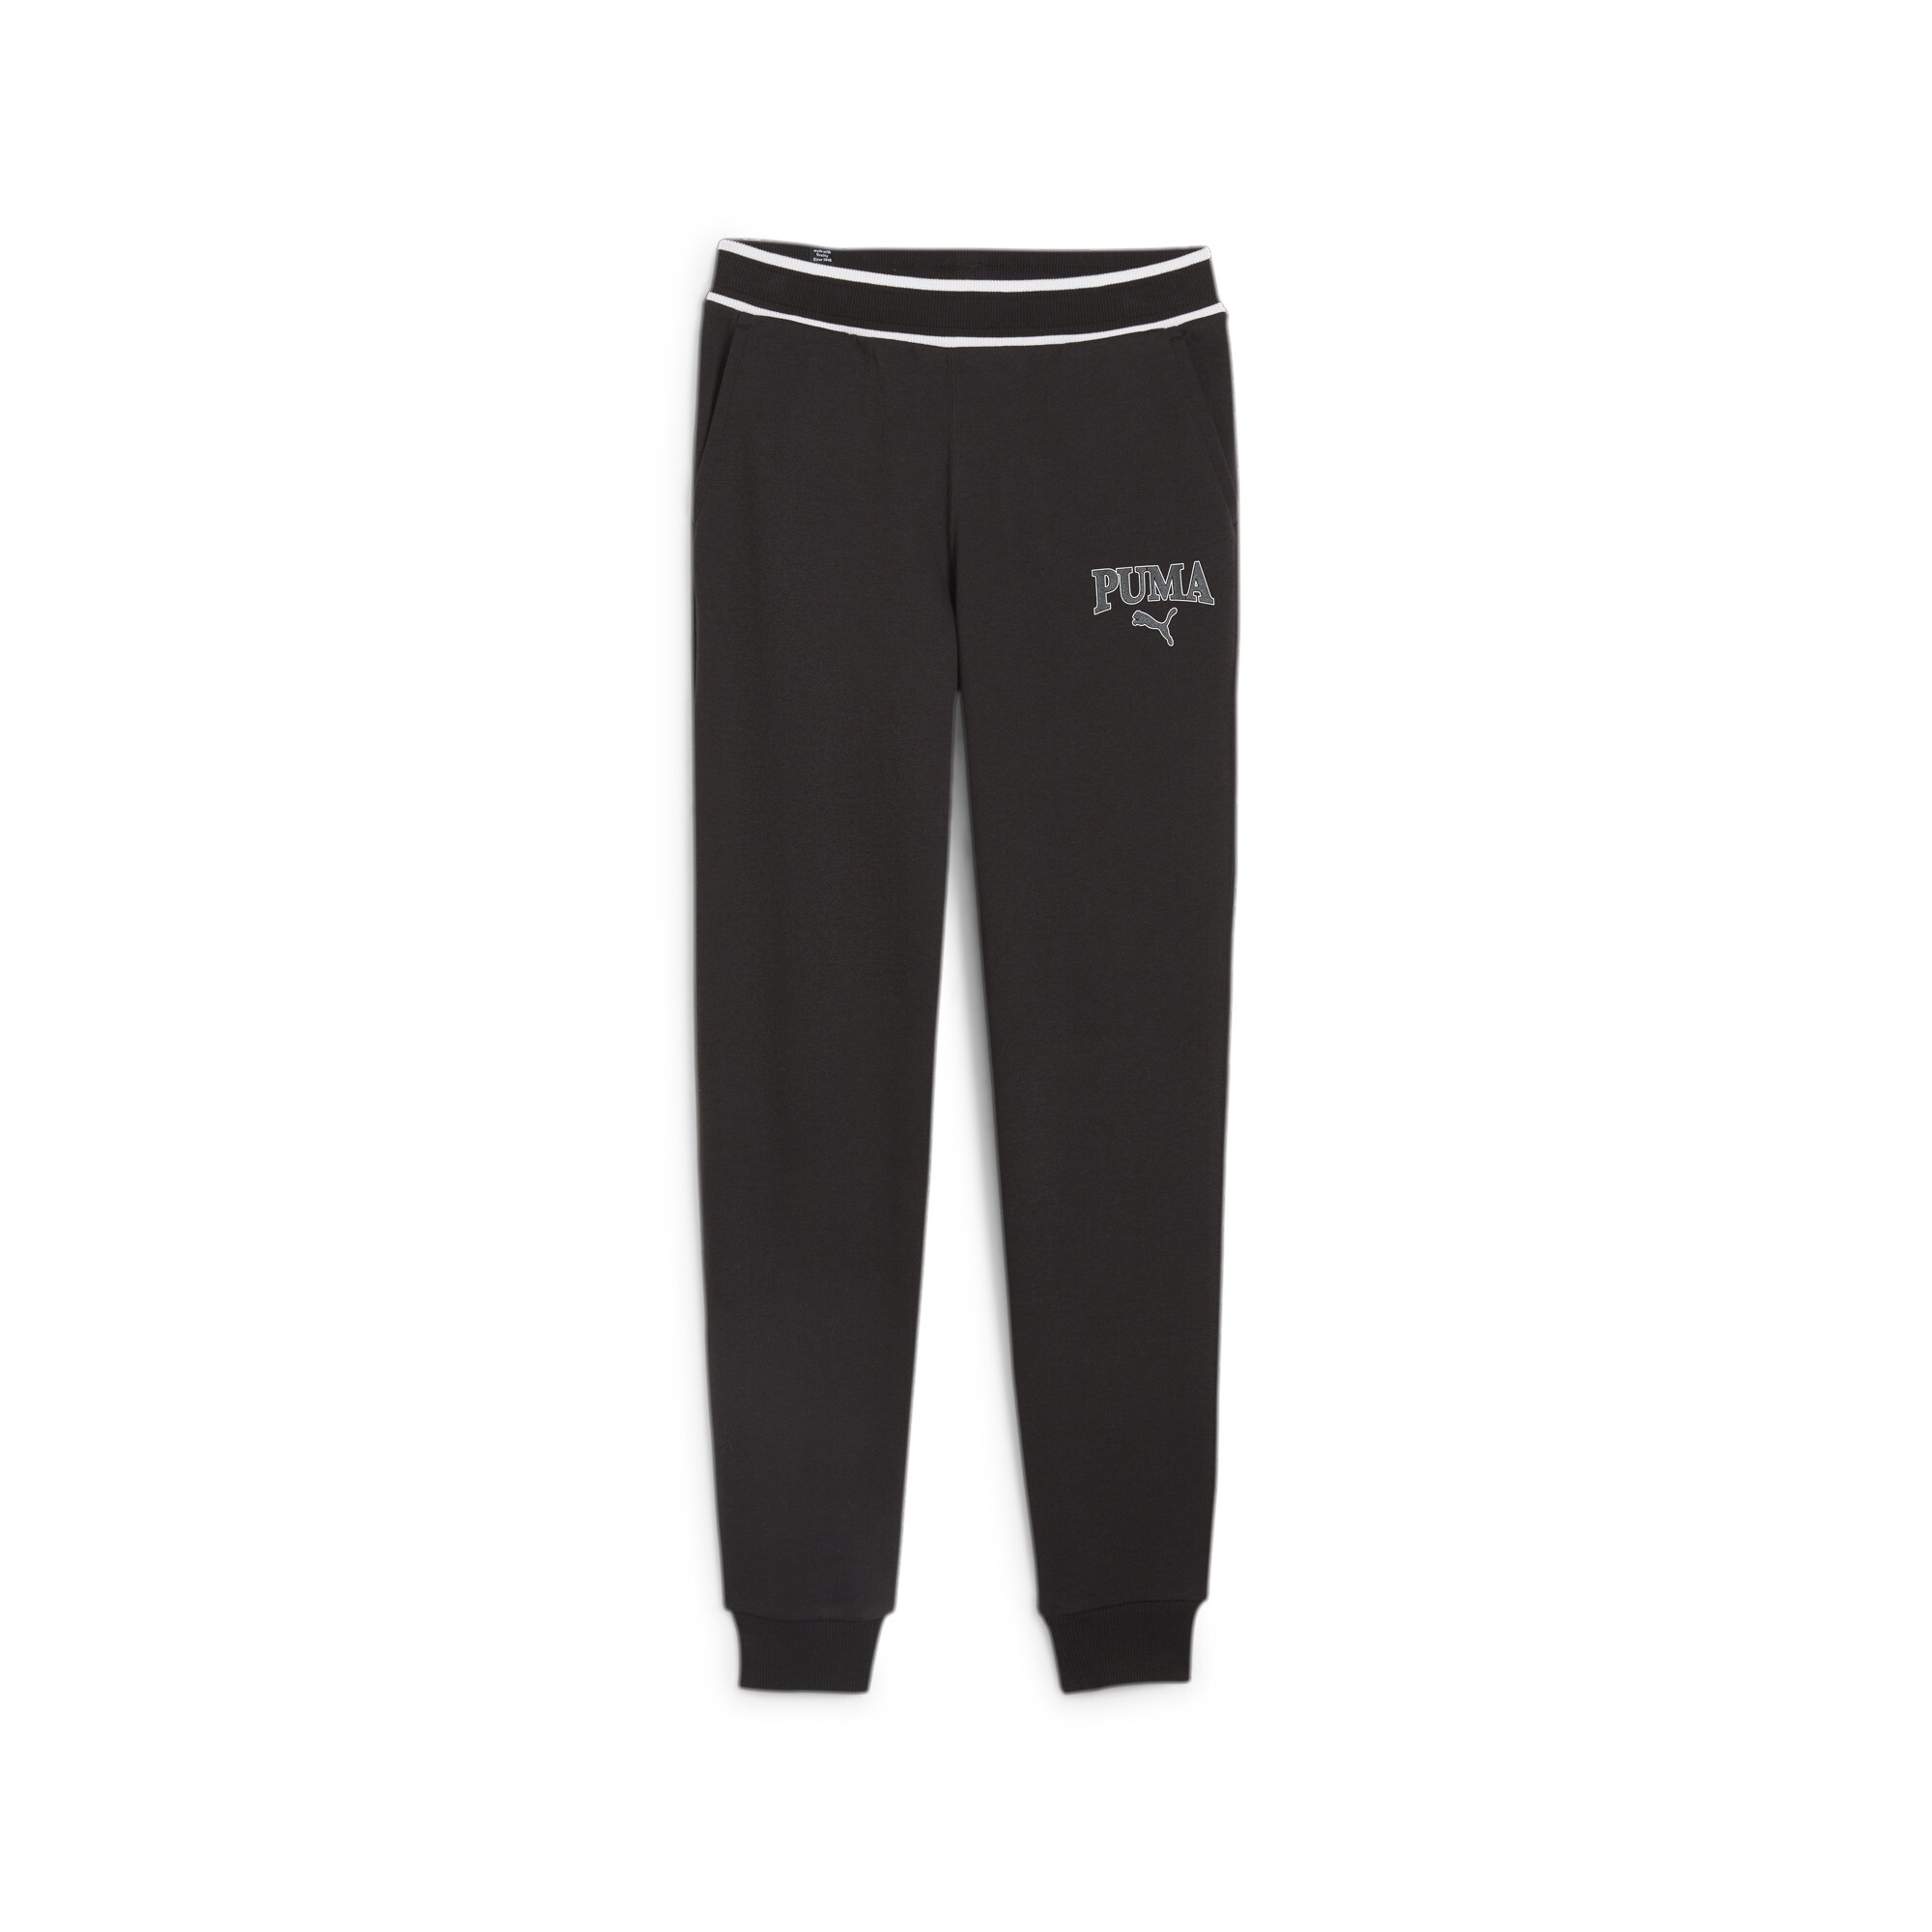 Men's Puma SQUAD Youth Sweatpants, Black, Size 13-14Y, Age